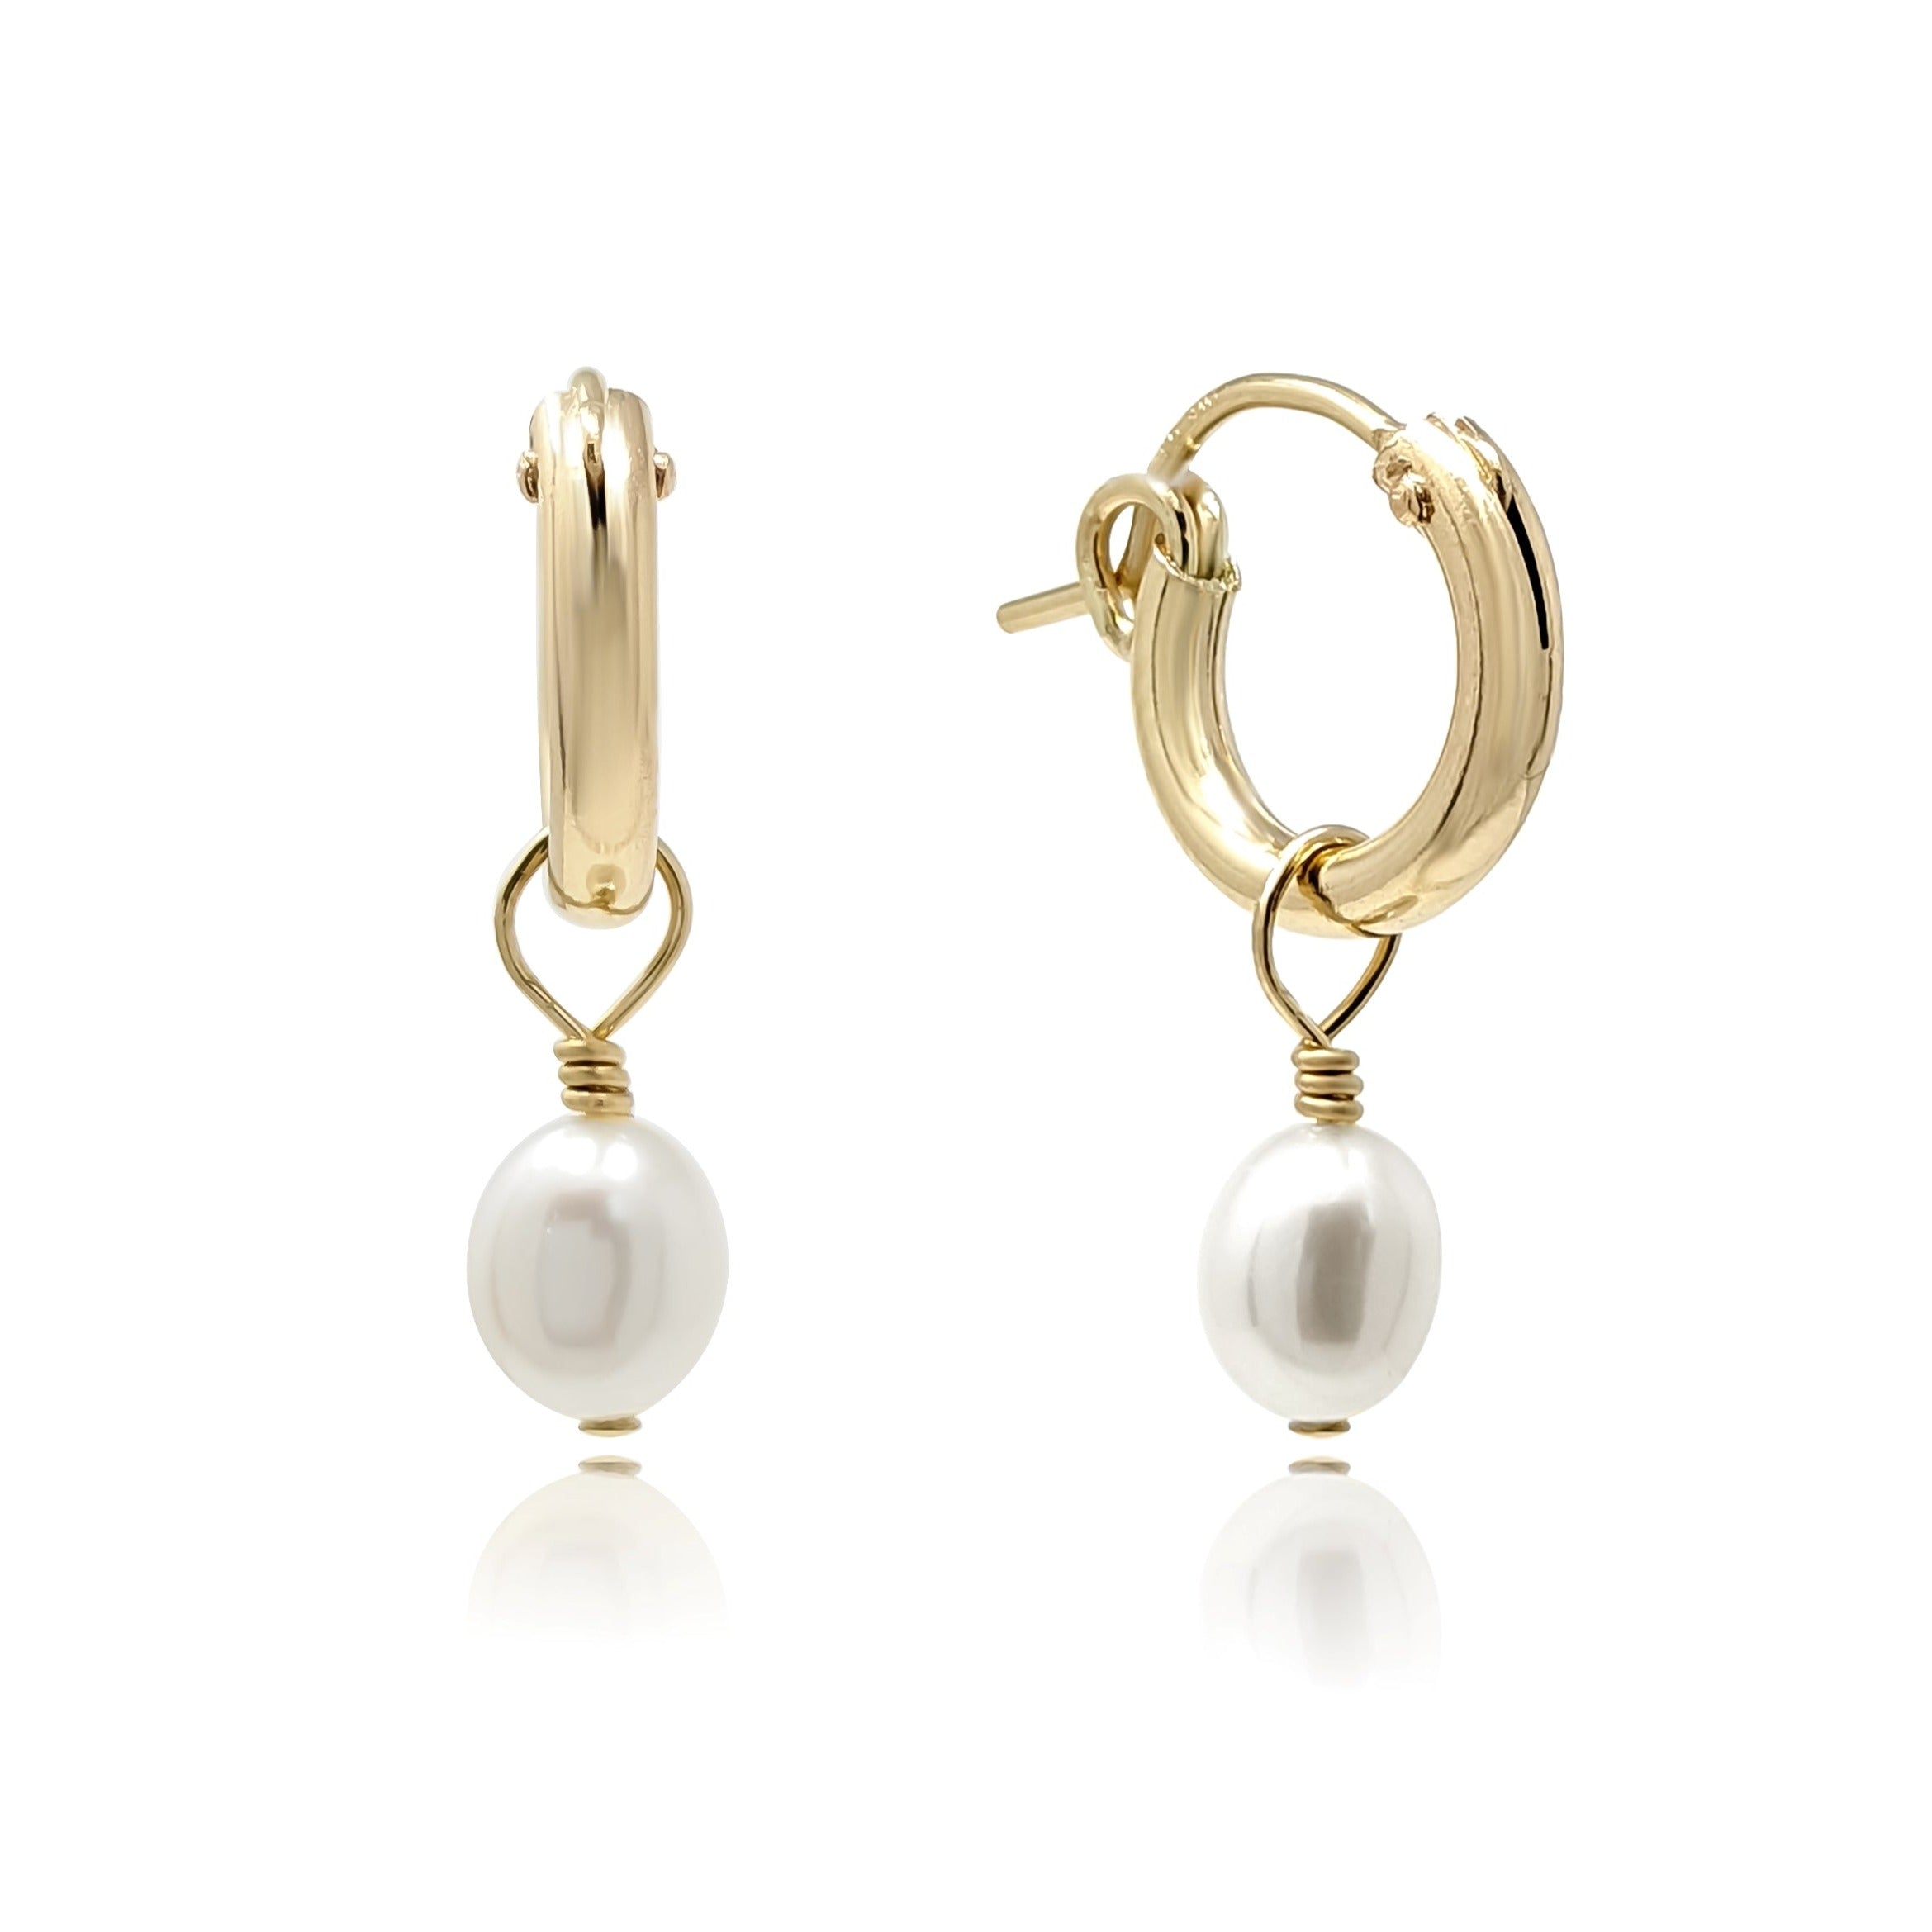 Small pearl hoop earrings in gold filled